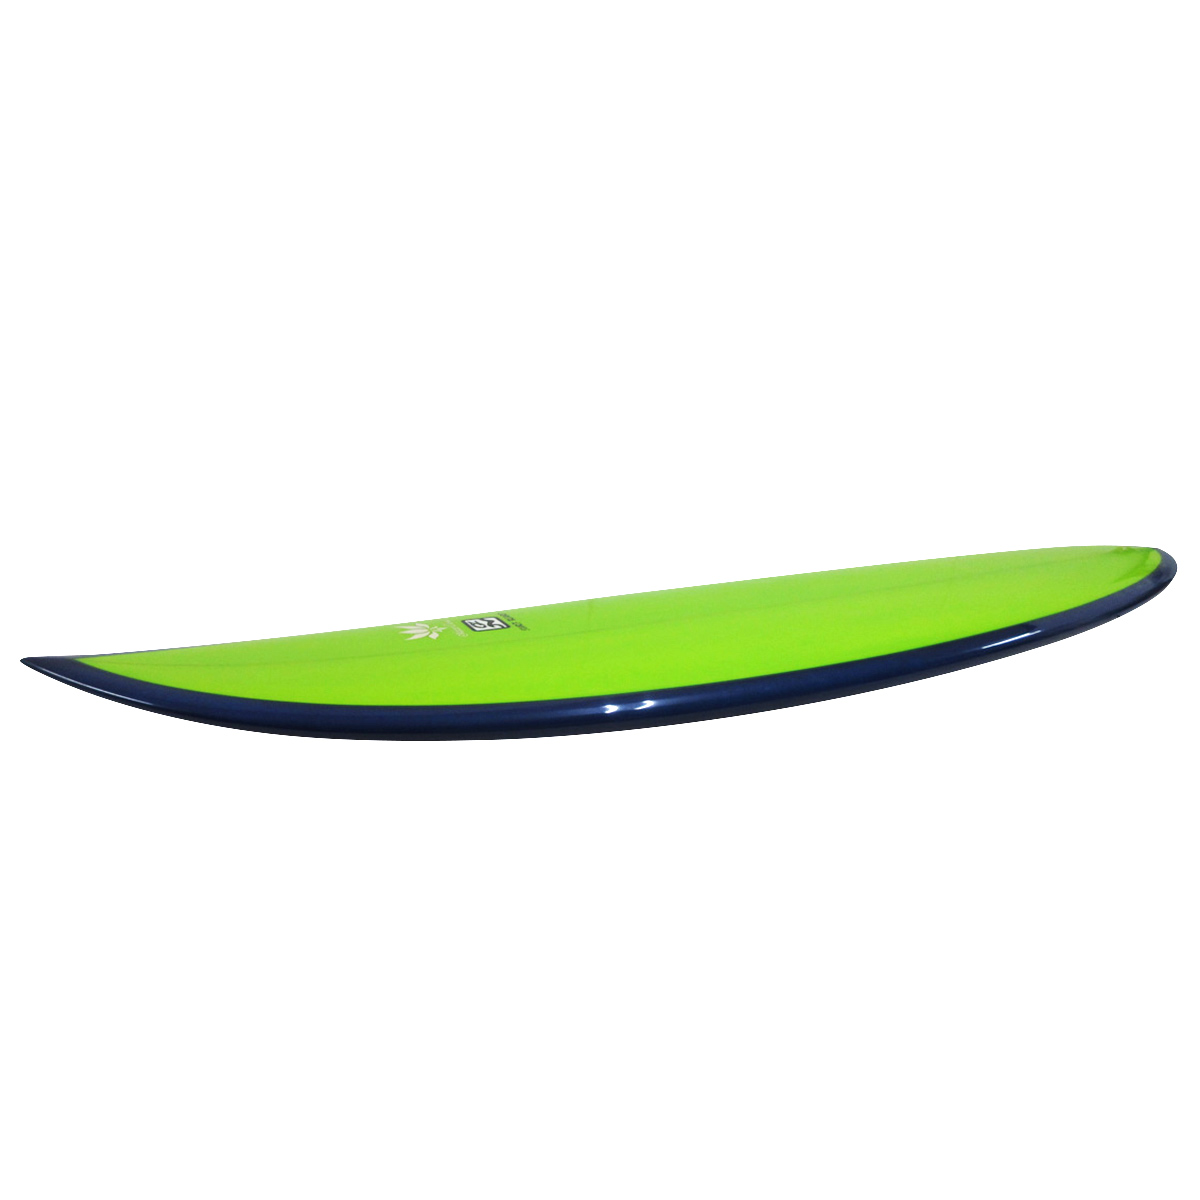 OZ SURFBOARDS / RABBIT 2+1 6`6